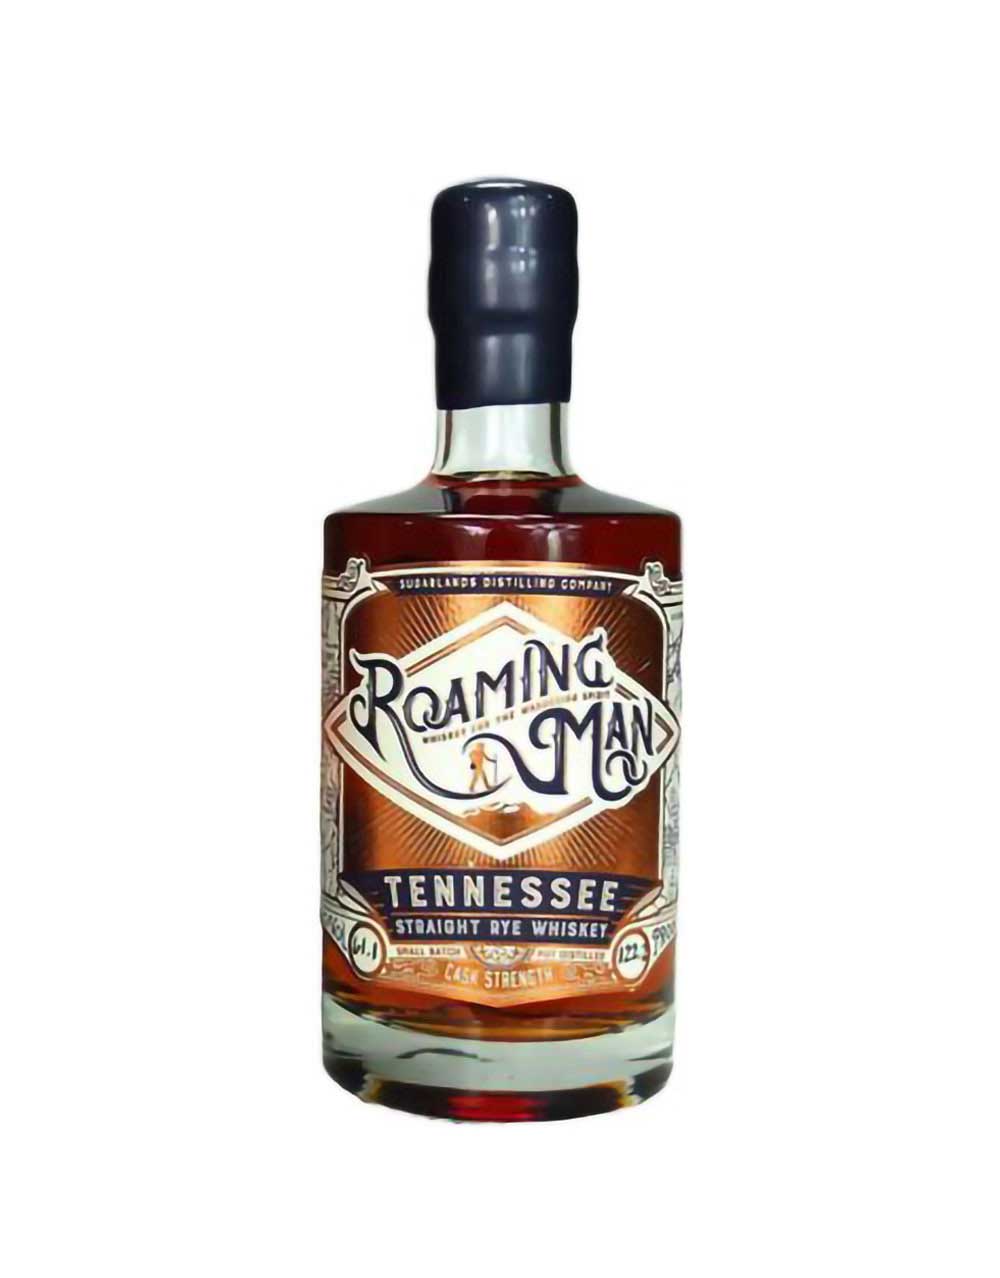 Roaming Man Tennessee Straight Rye Whiskey (Cask Strength)